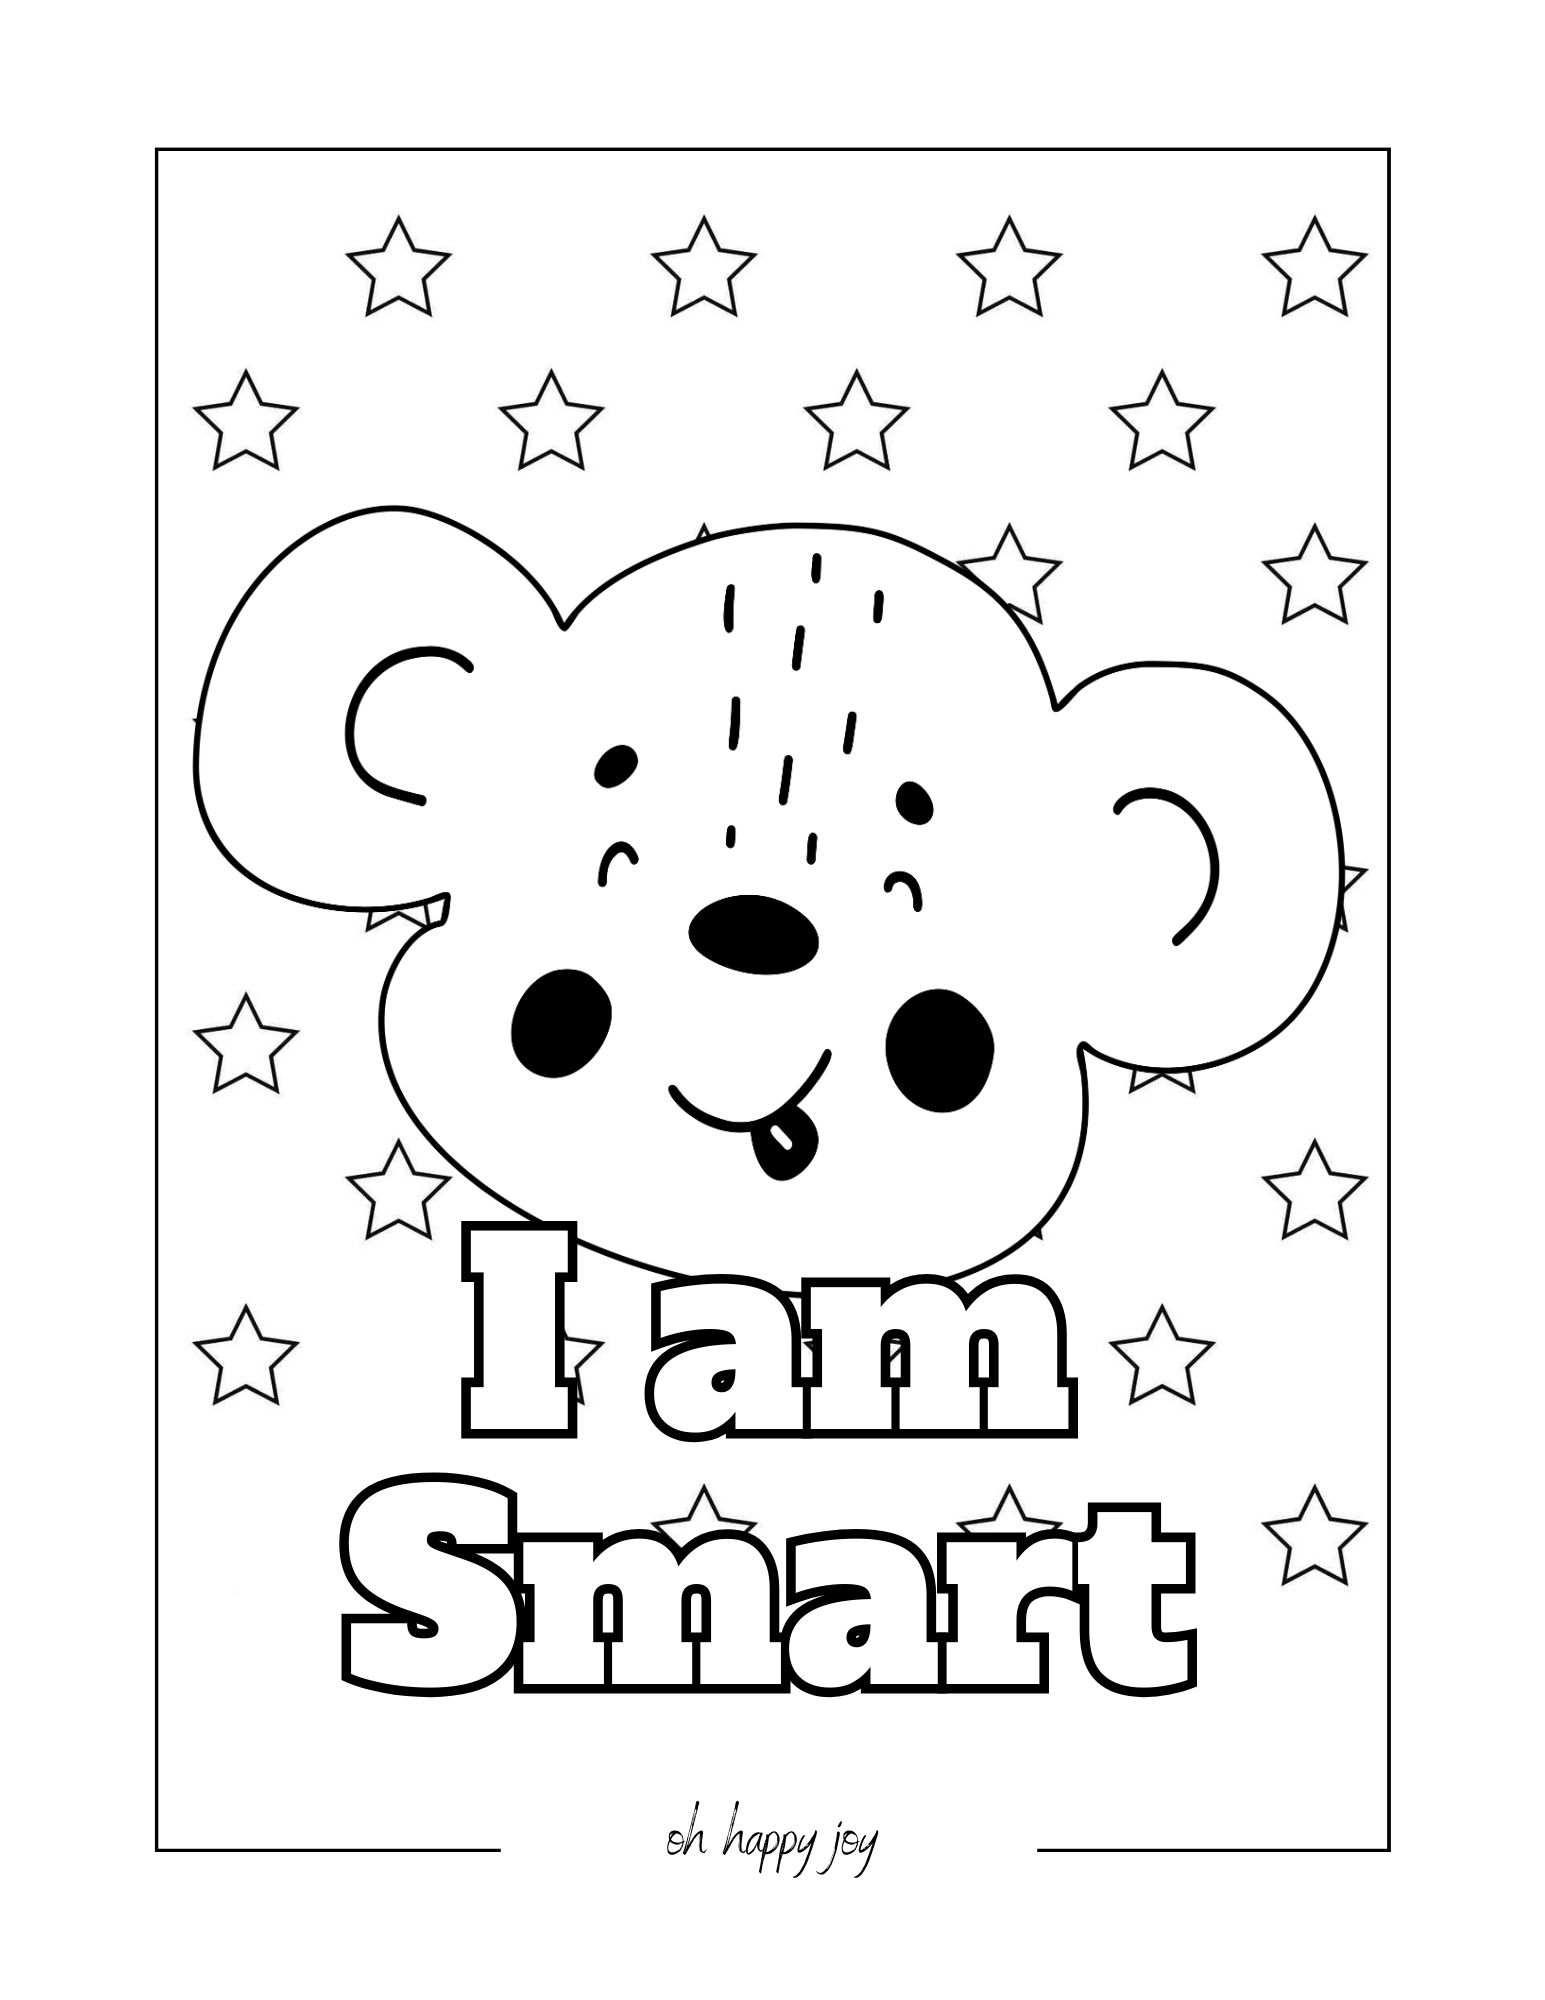 I am smart affirmation coloring page